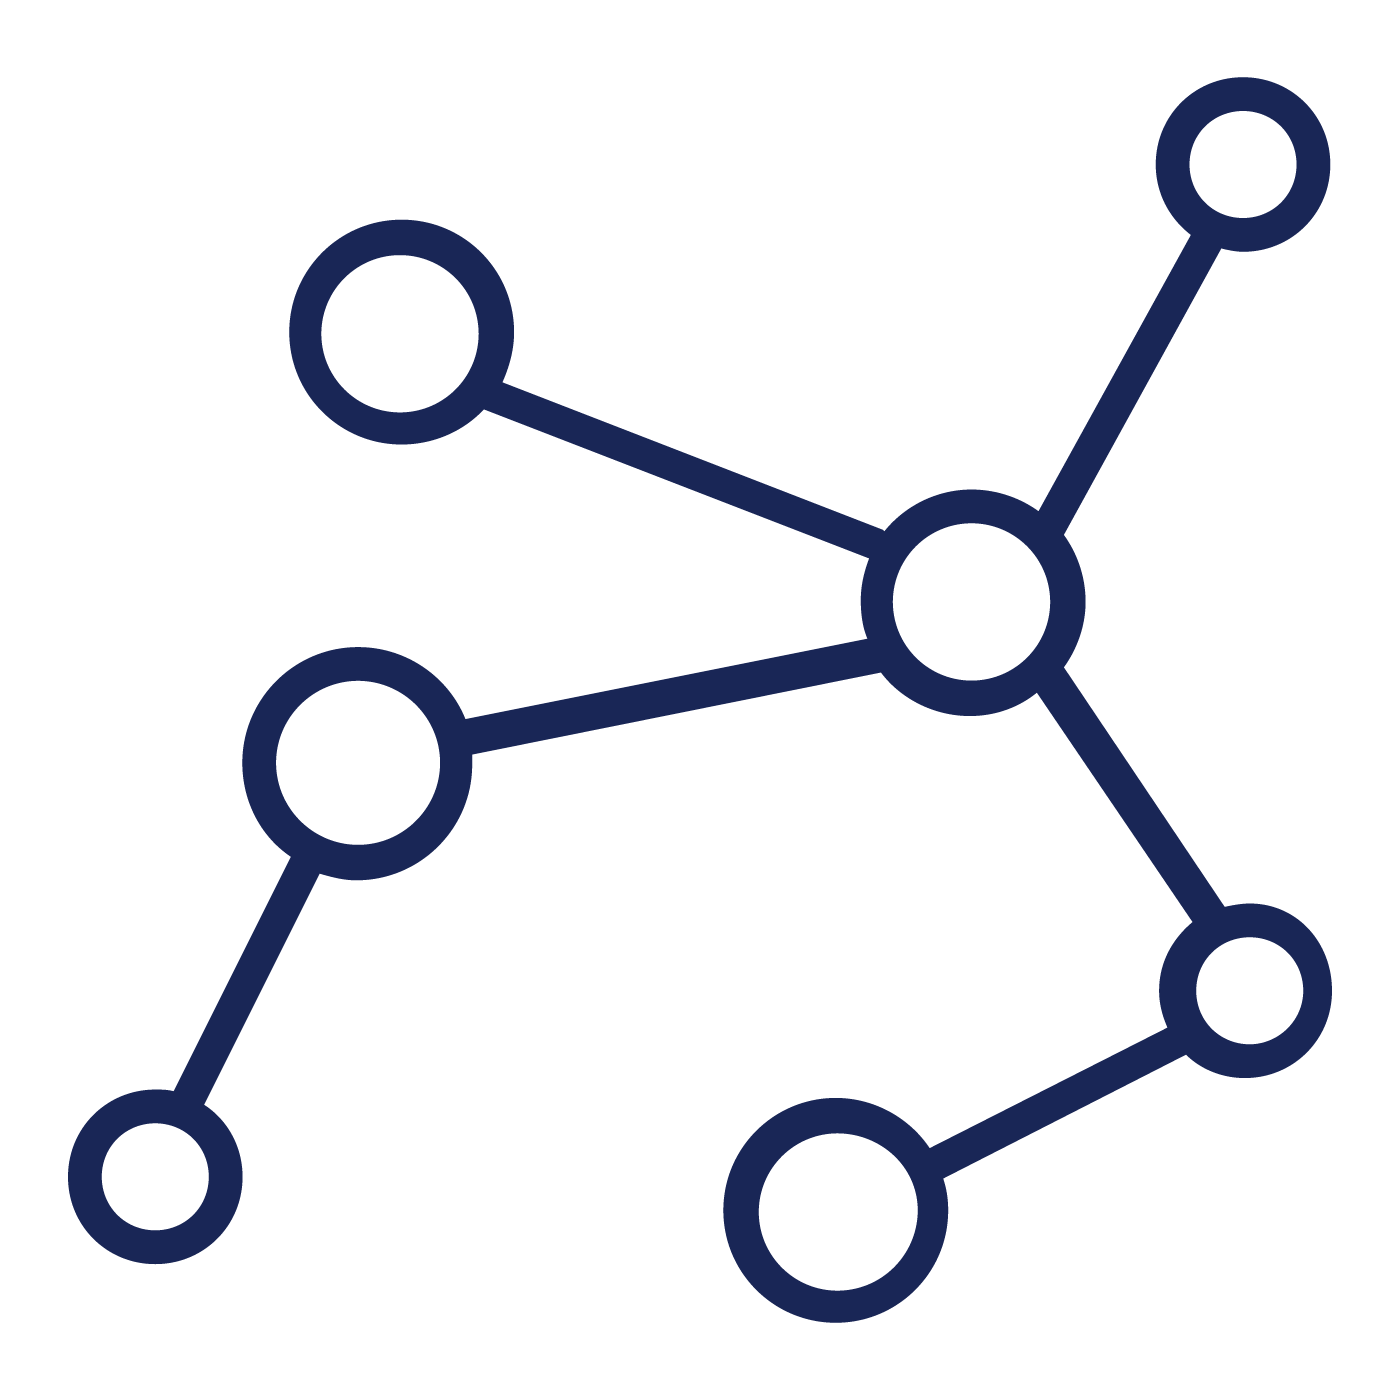 node network graphic icon